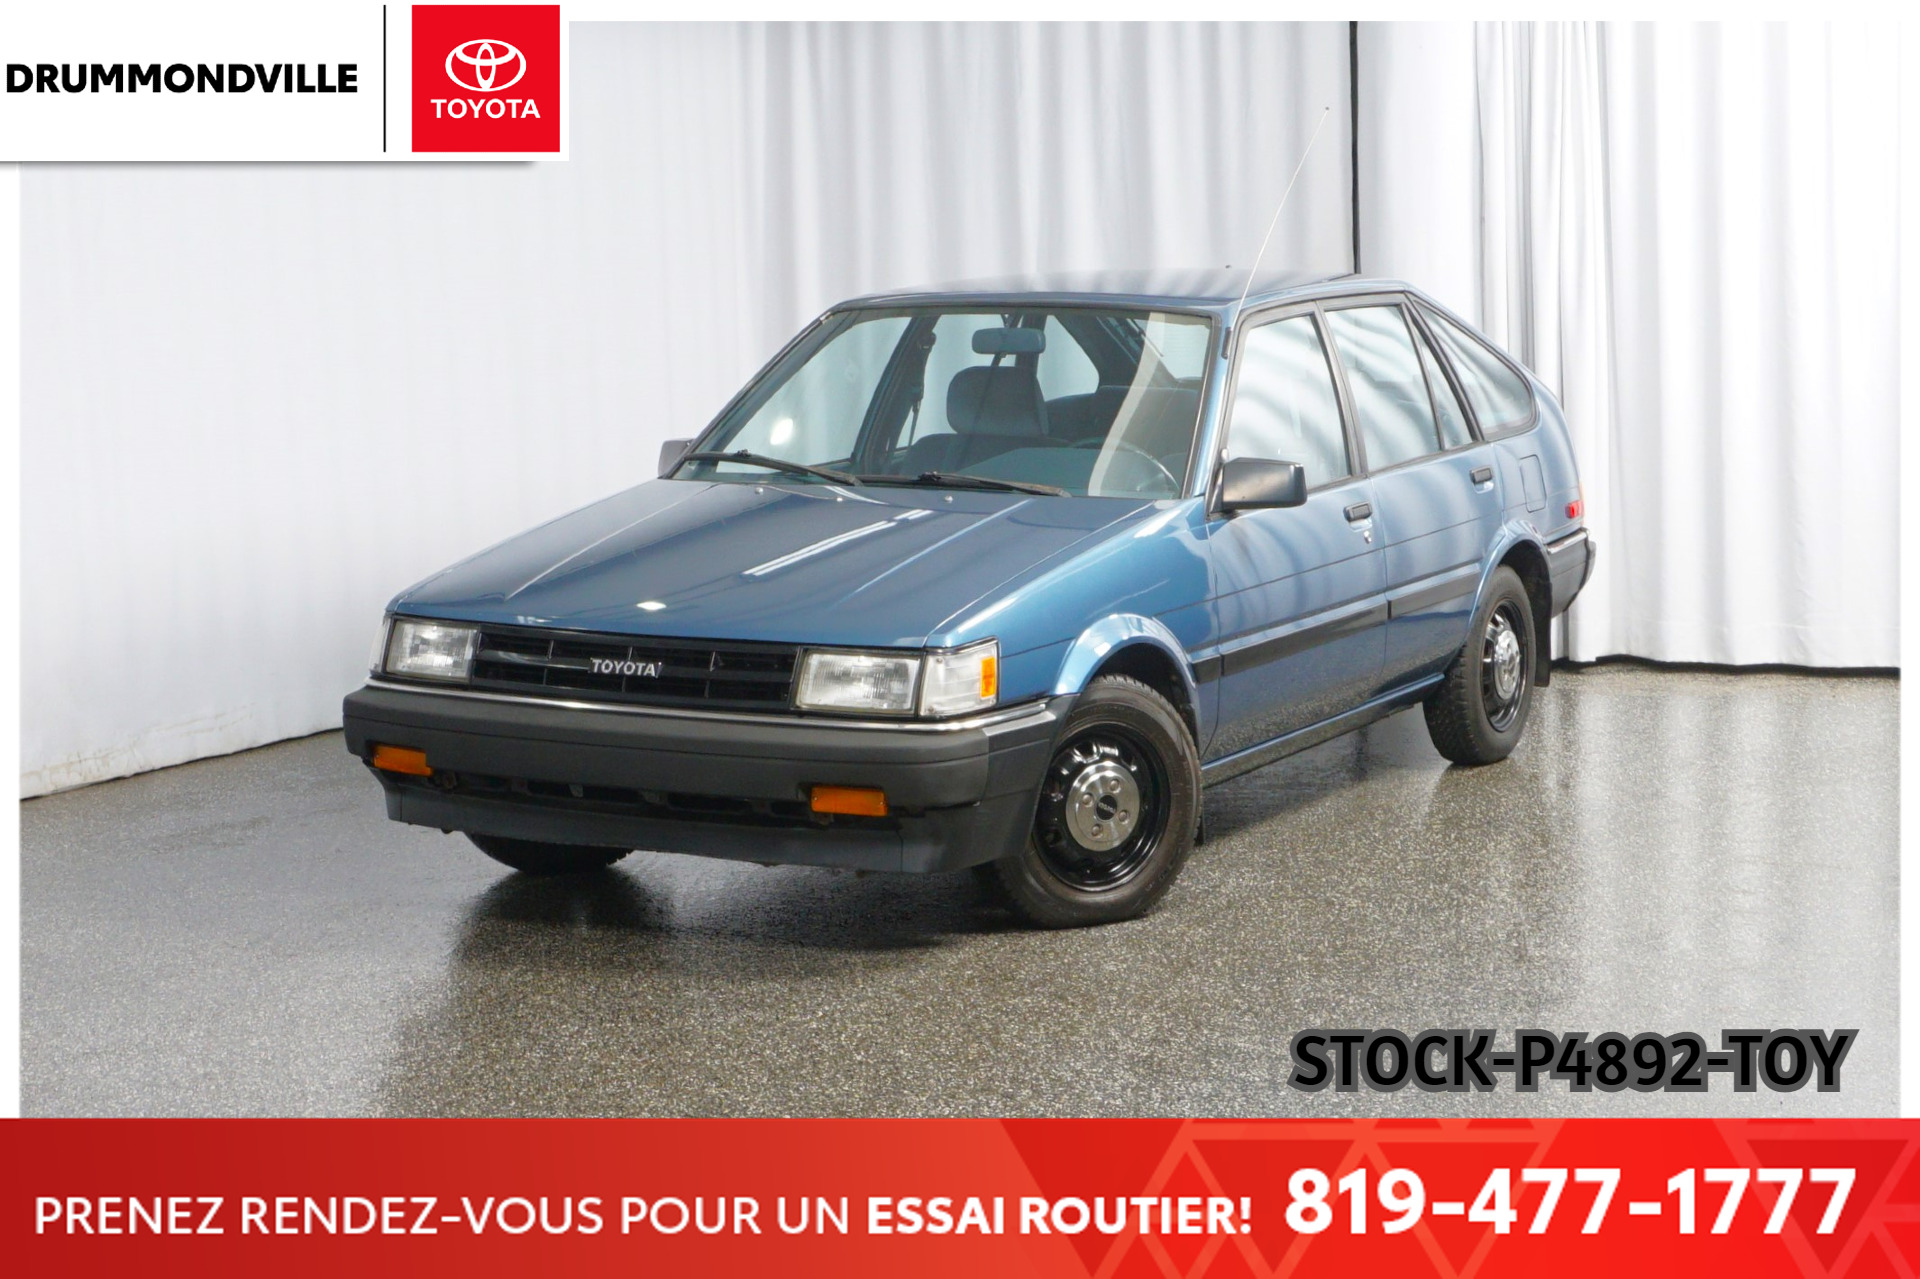 1986 Toyota Corolla AE85    ** DX LIFT BACK!!! ** ÉTAIT RARE EN 1986!